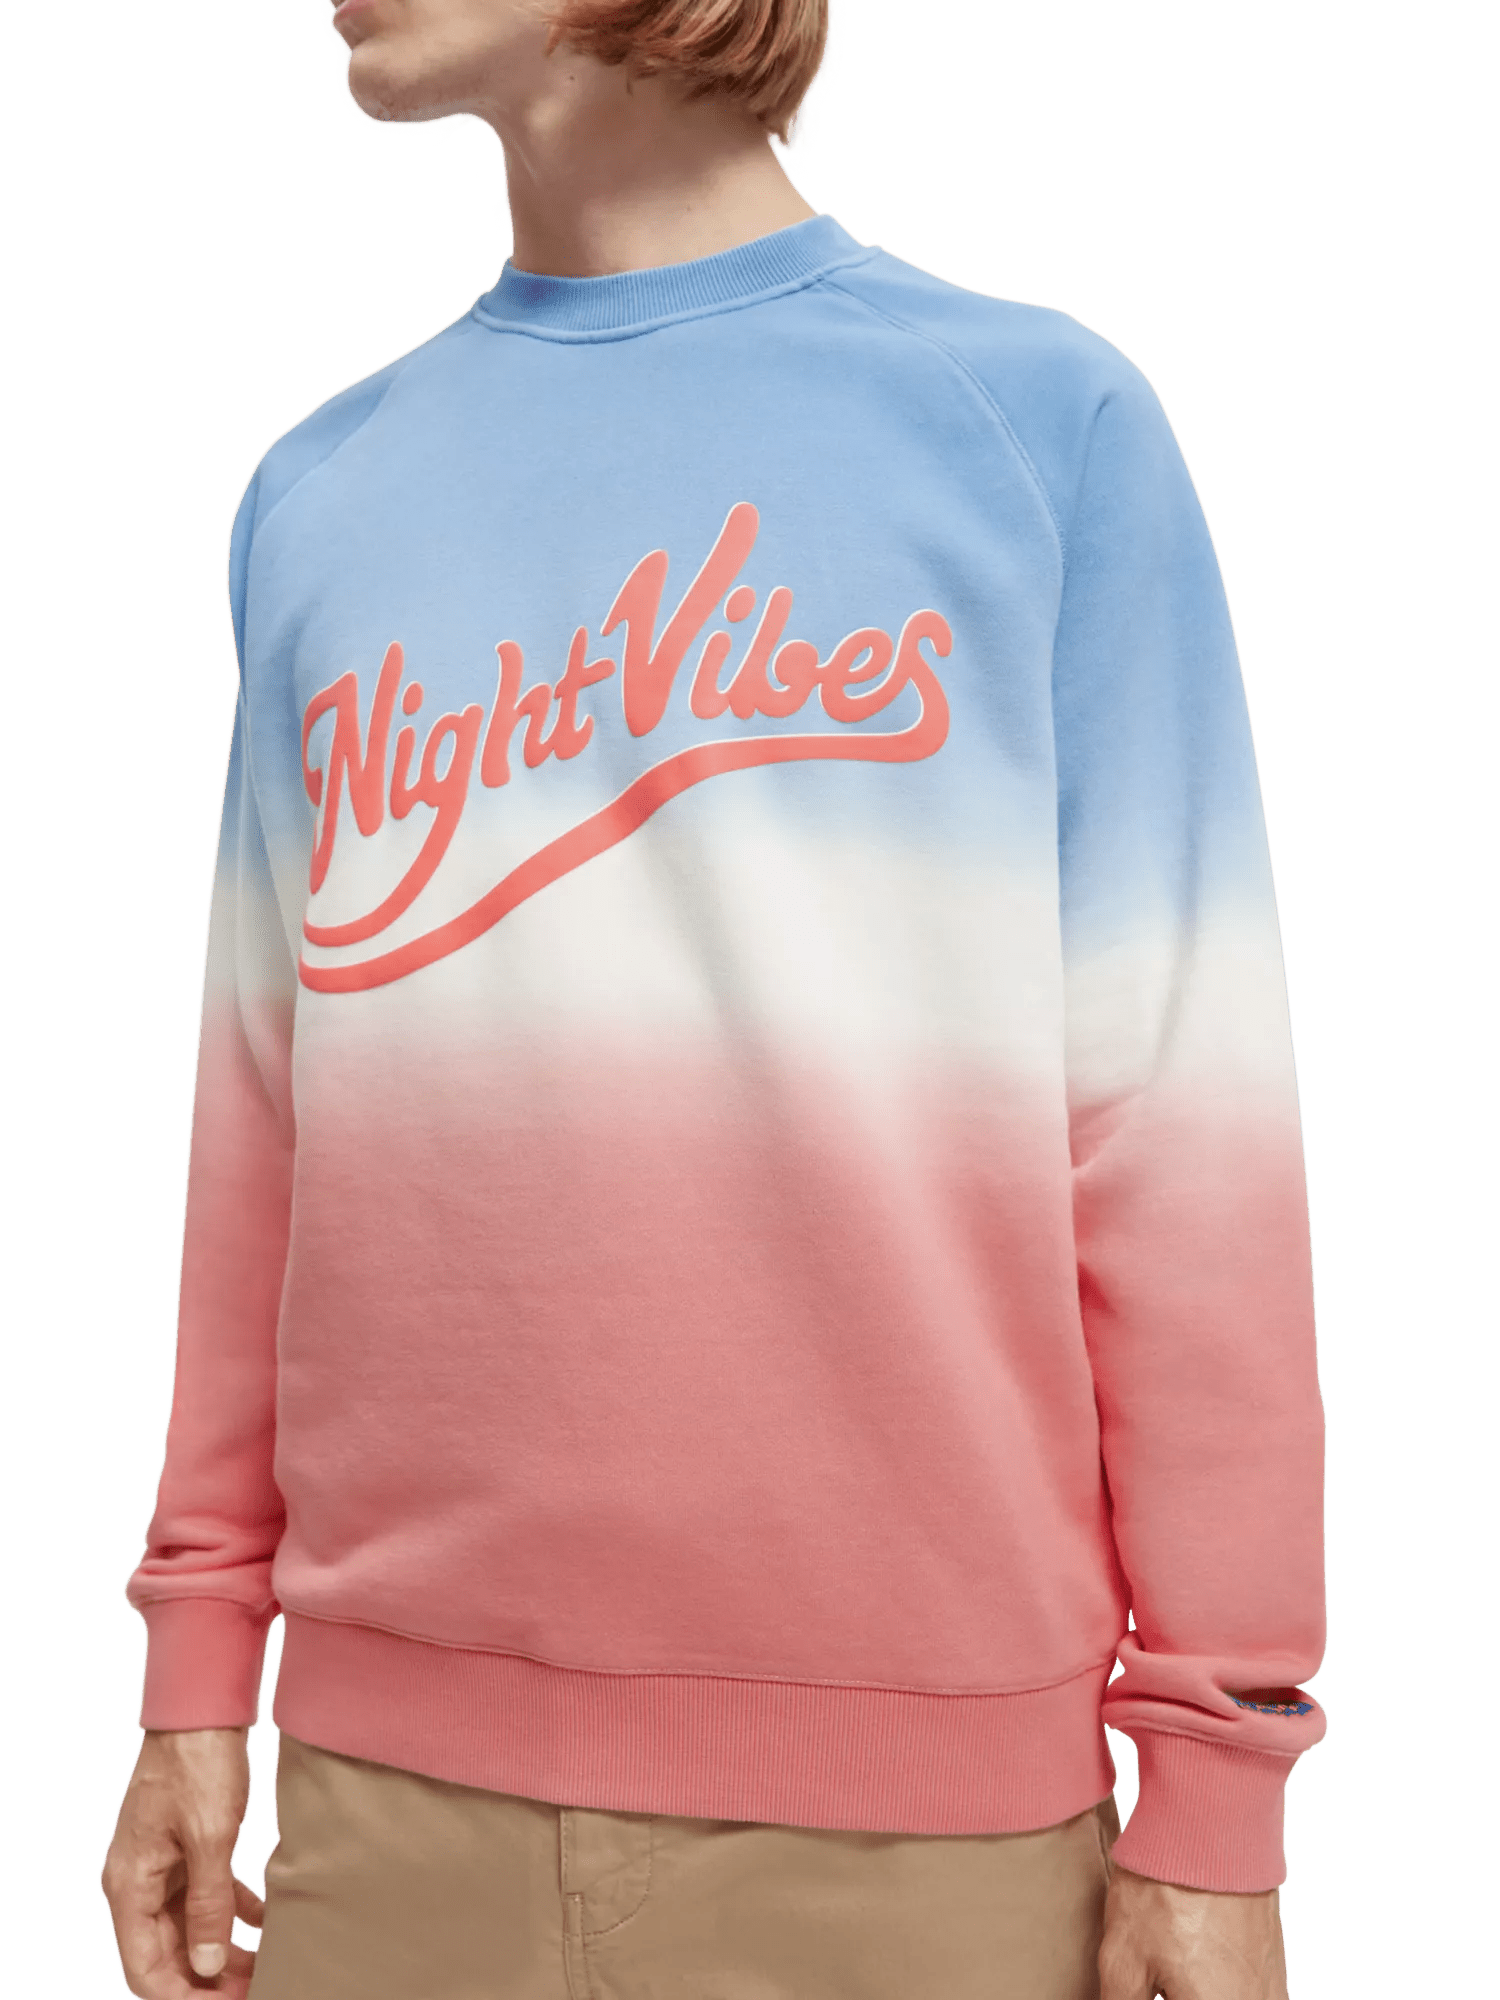 Dip-dyed crewneck artwork sweatshirt